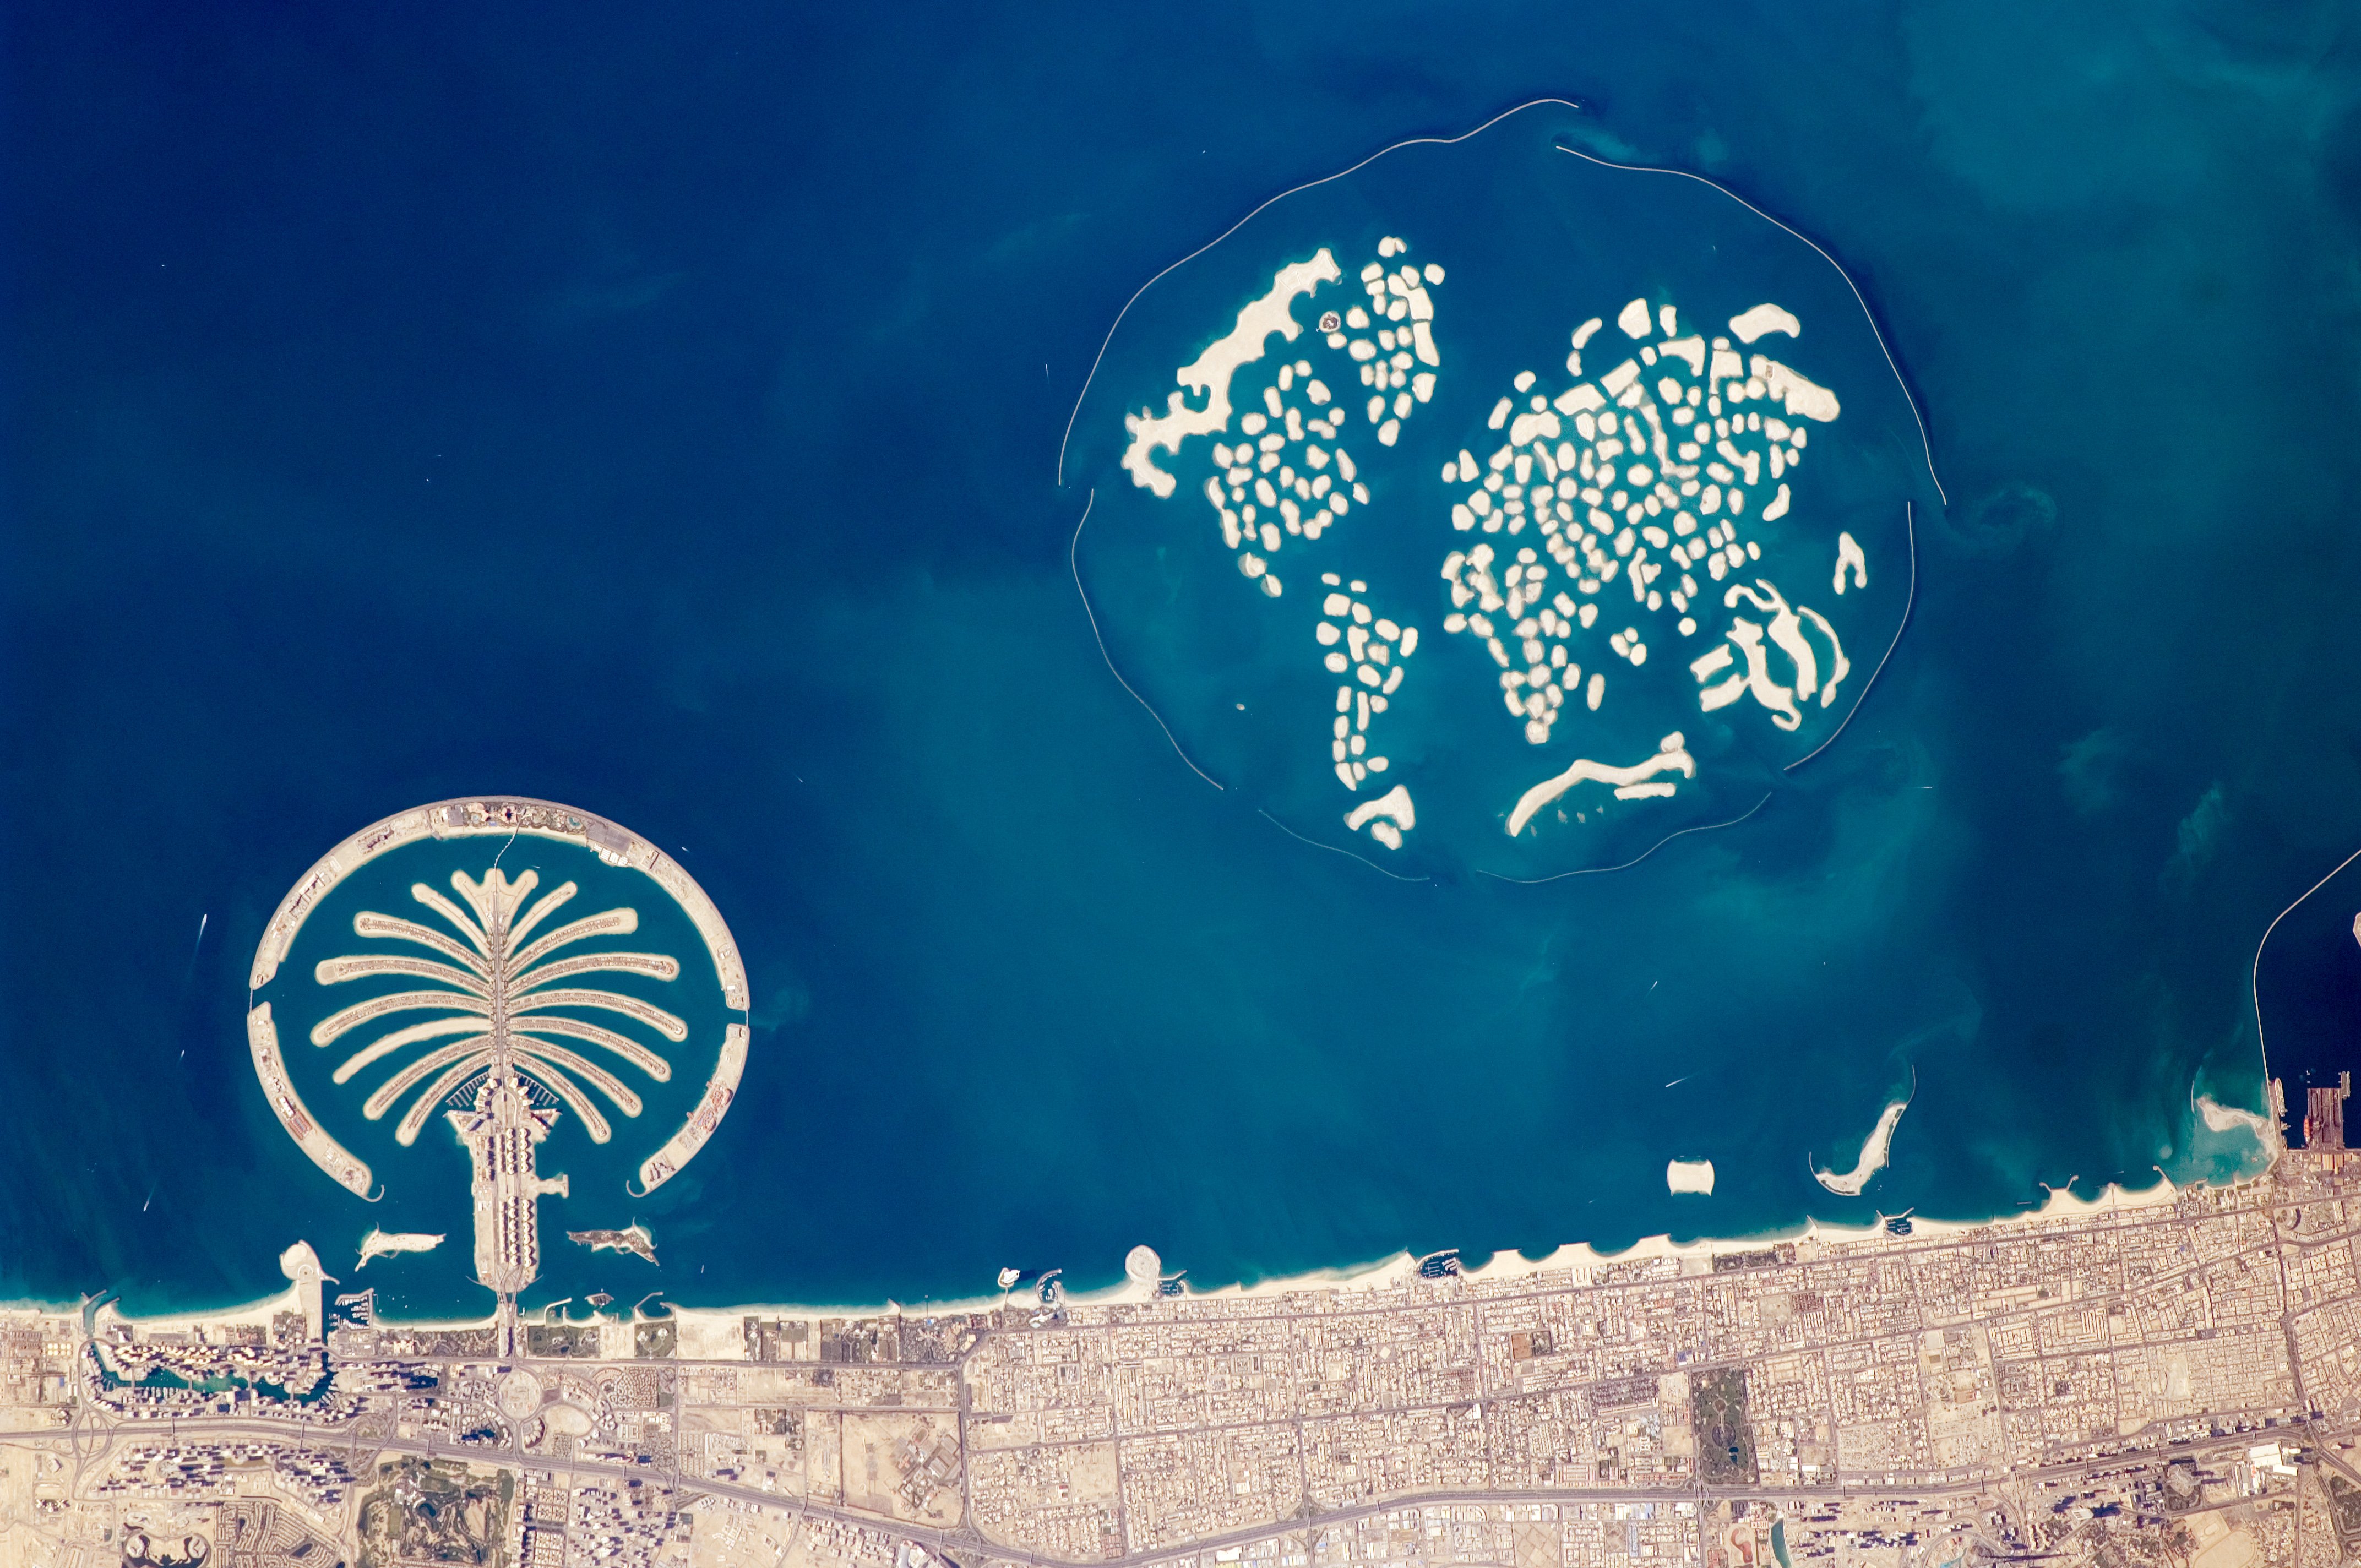 artificial_archipelagos_dubai_united_arab_emirates_iss022-e-024940_lrg